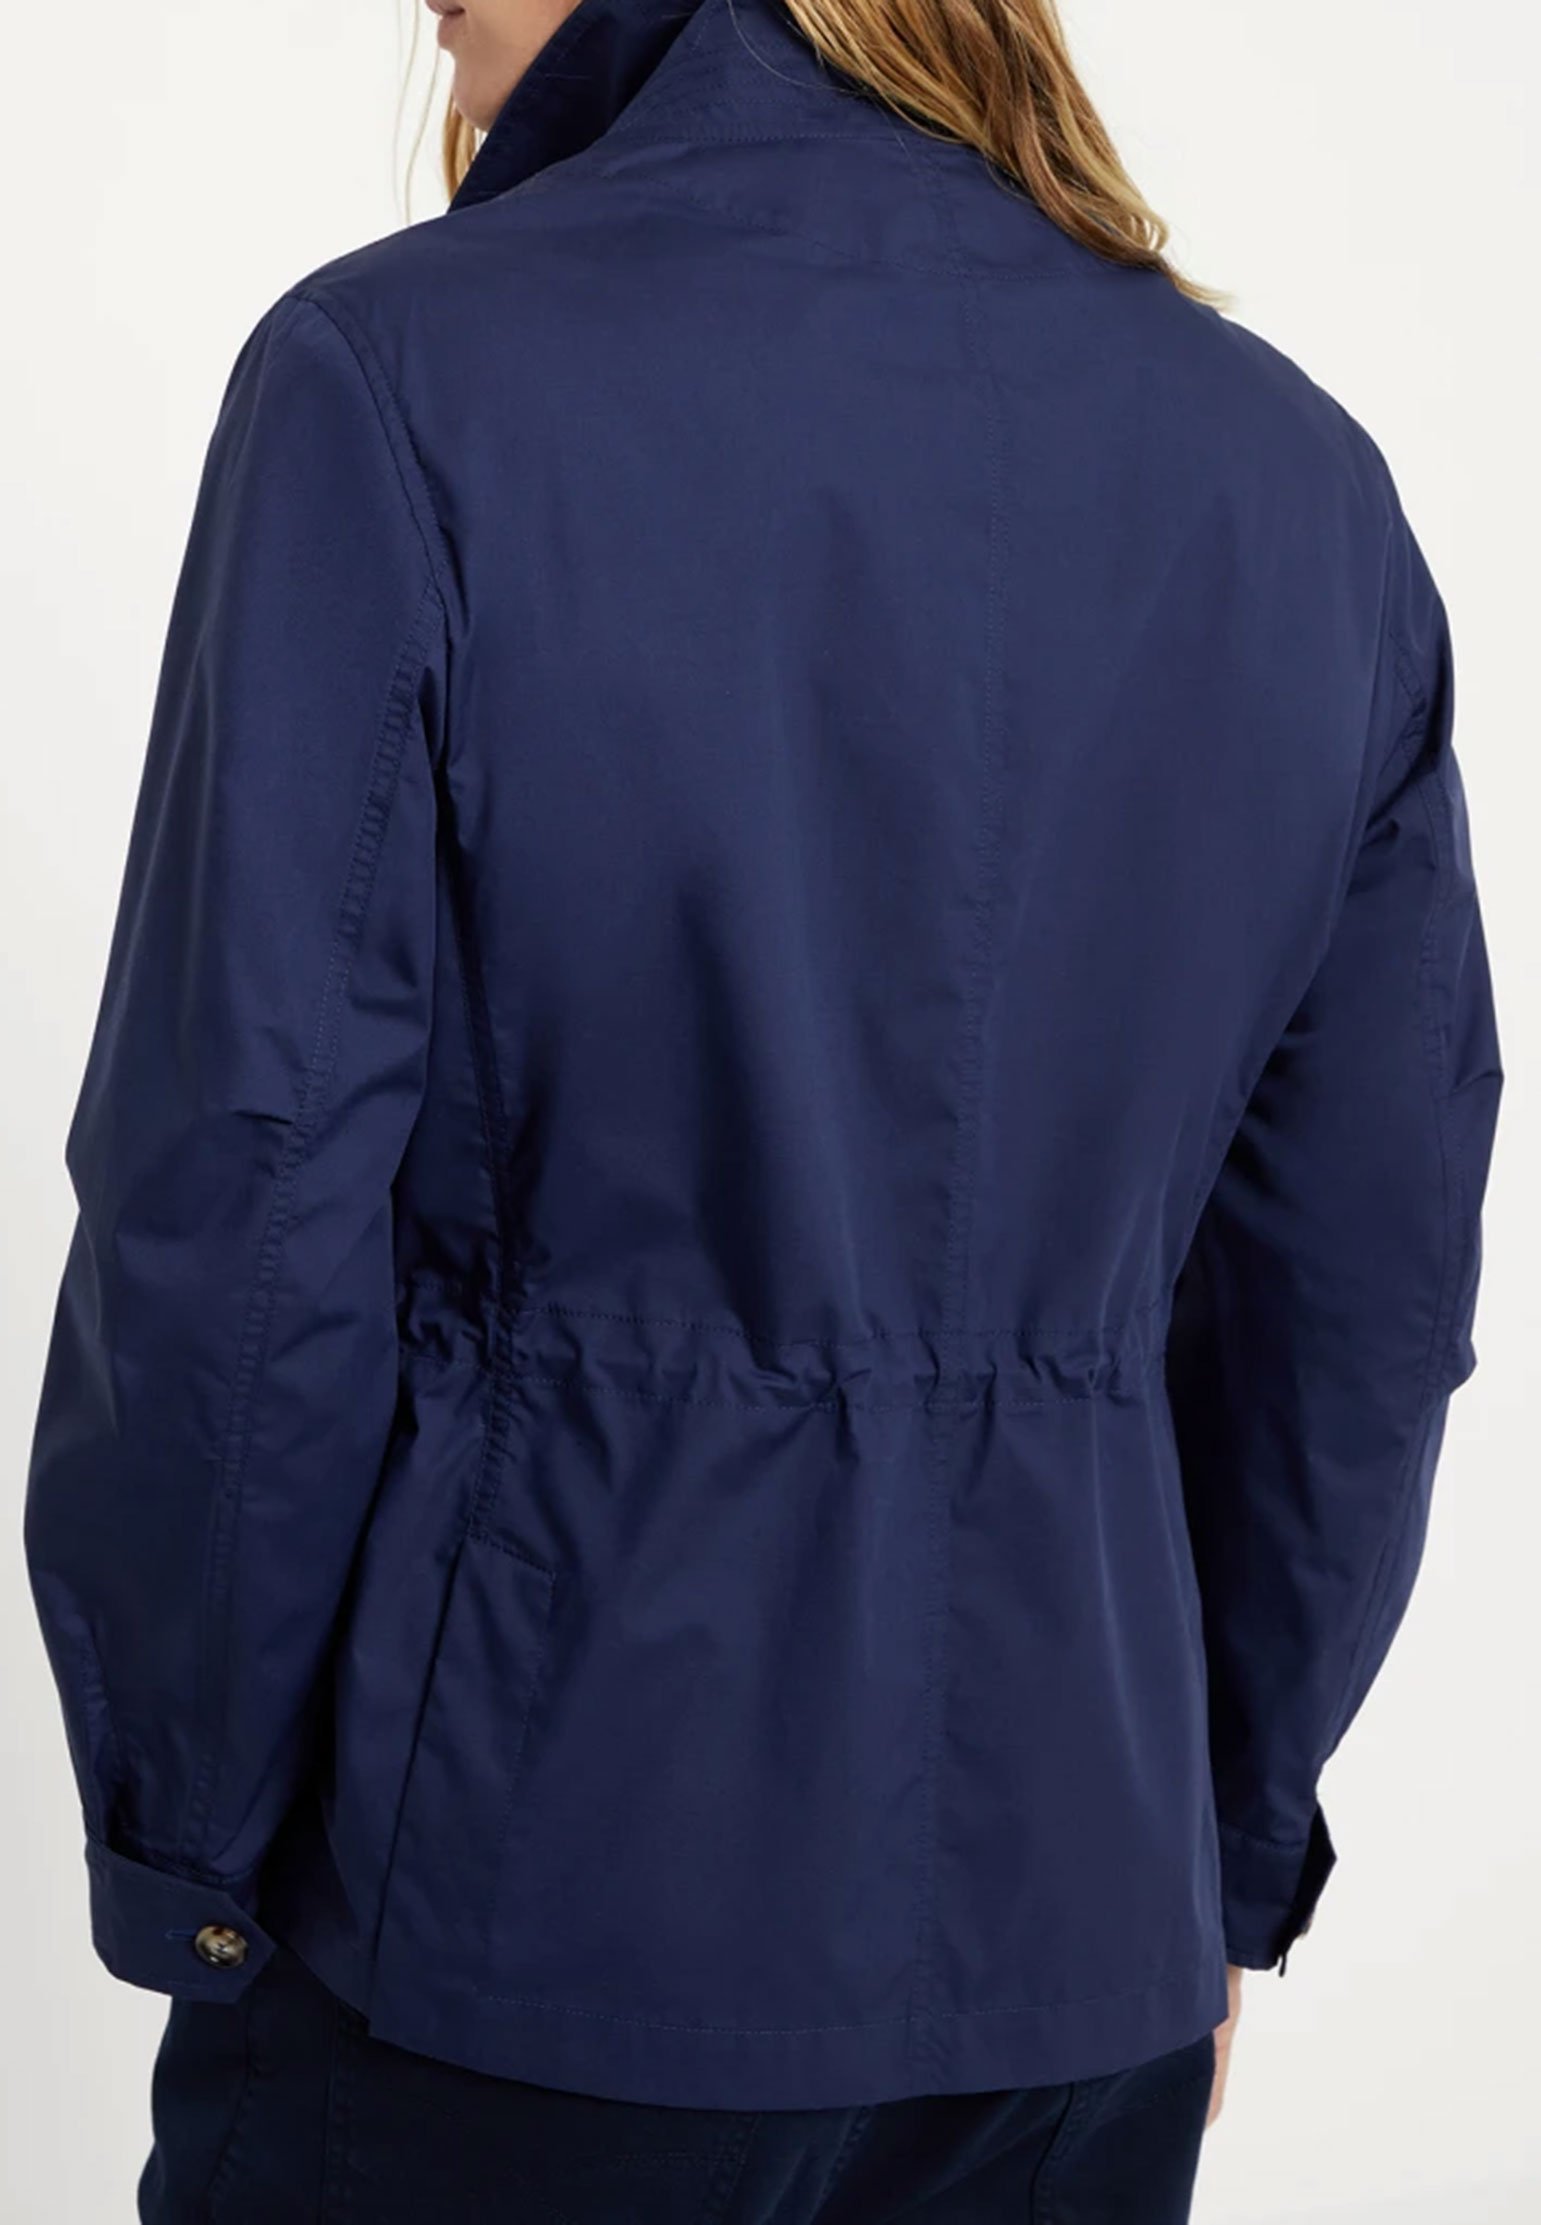 Jacket BRUNELLO CUCINELLI Color: blue (Code: 3506) in online store Allure